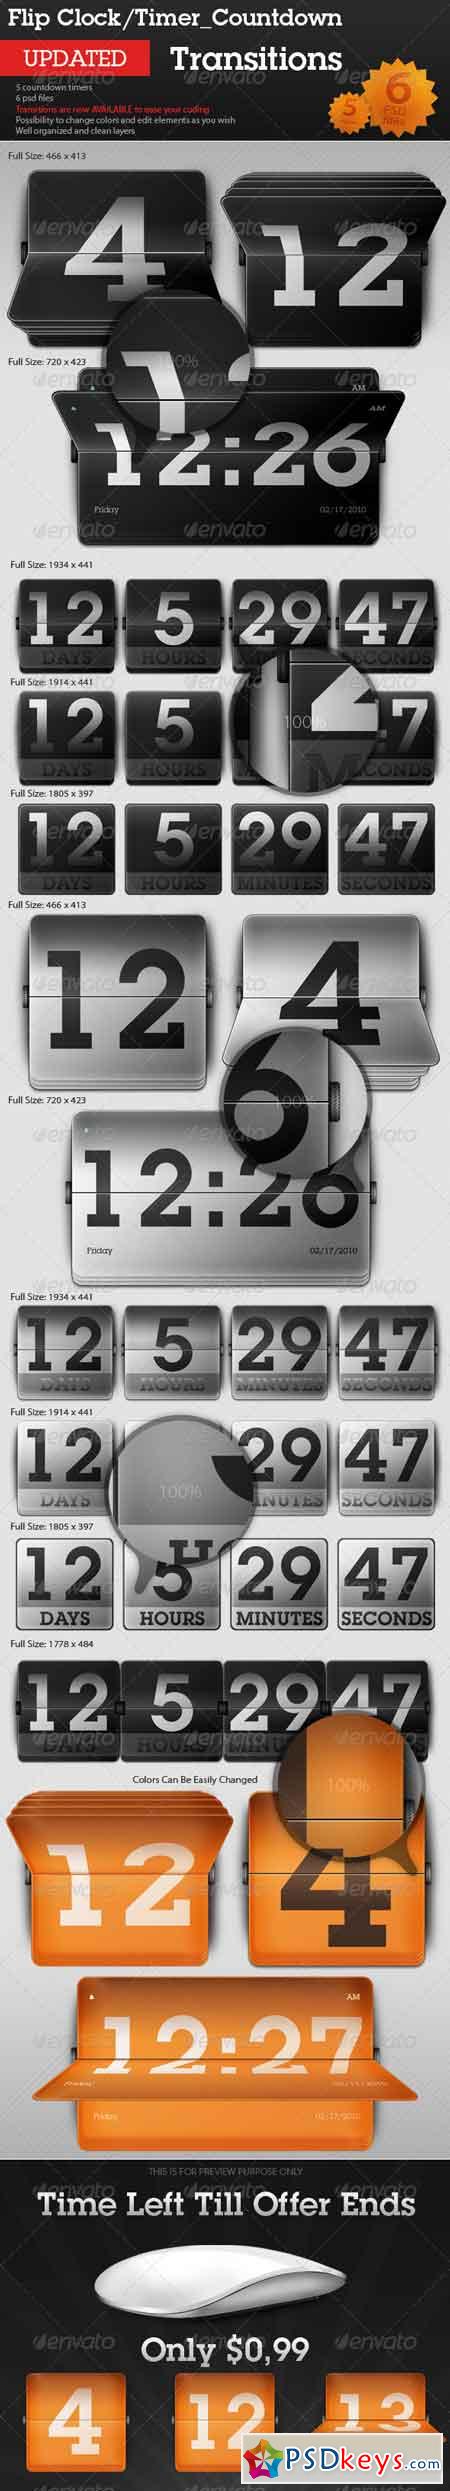 Flip Clock Countdown Timer - Transitions 94862